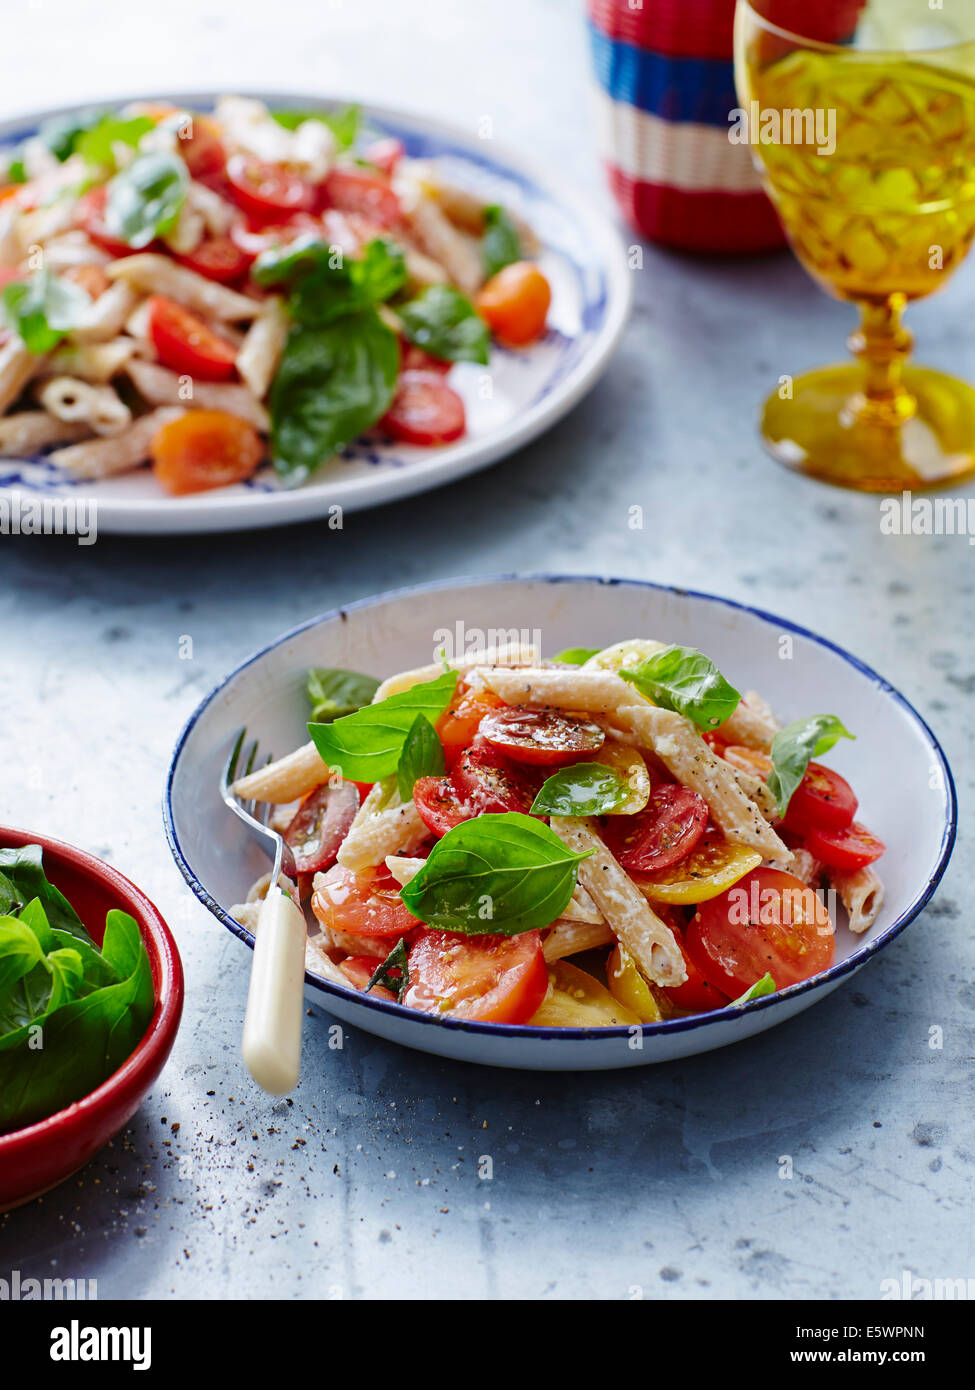 Tomato, basil and pasta salad Stock Photo